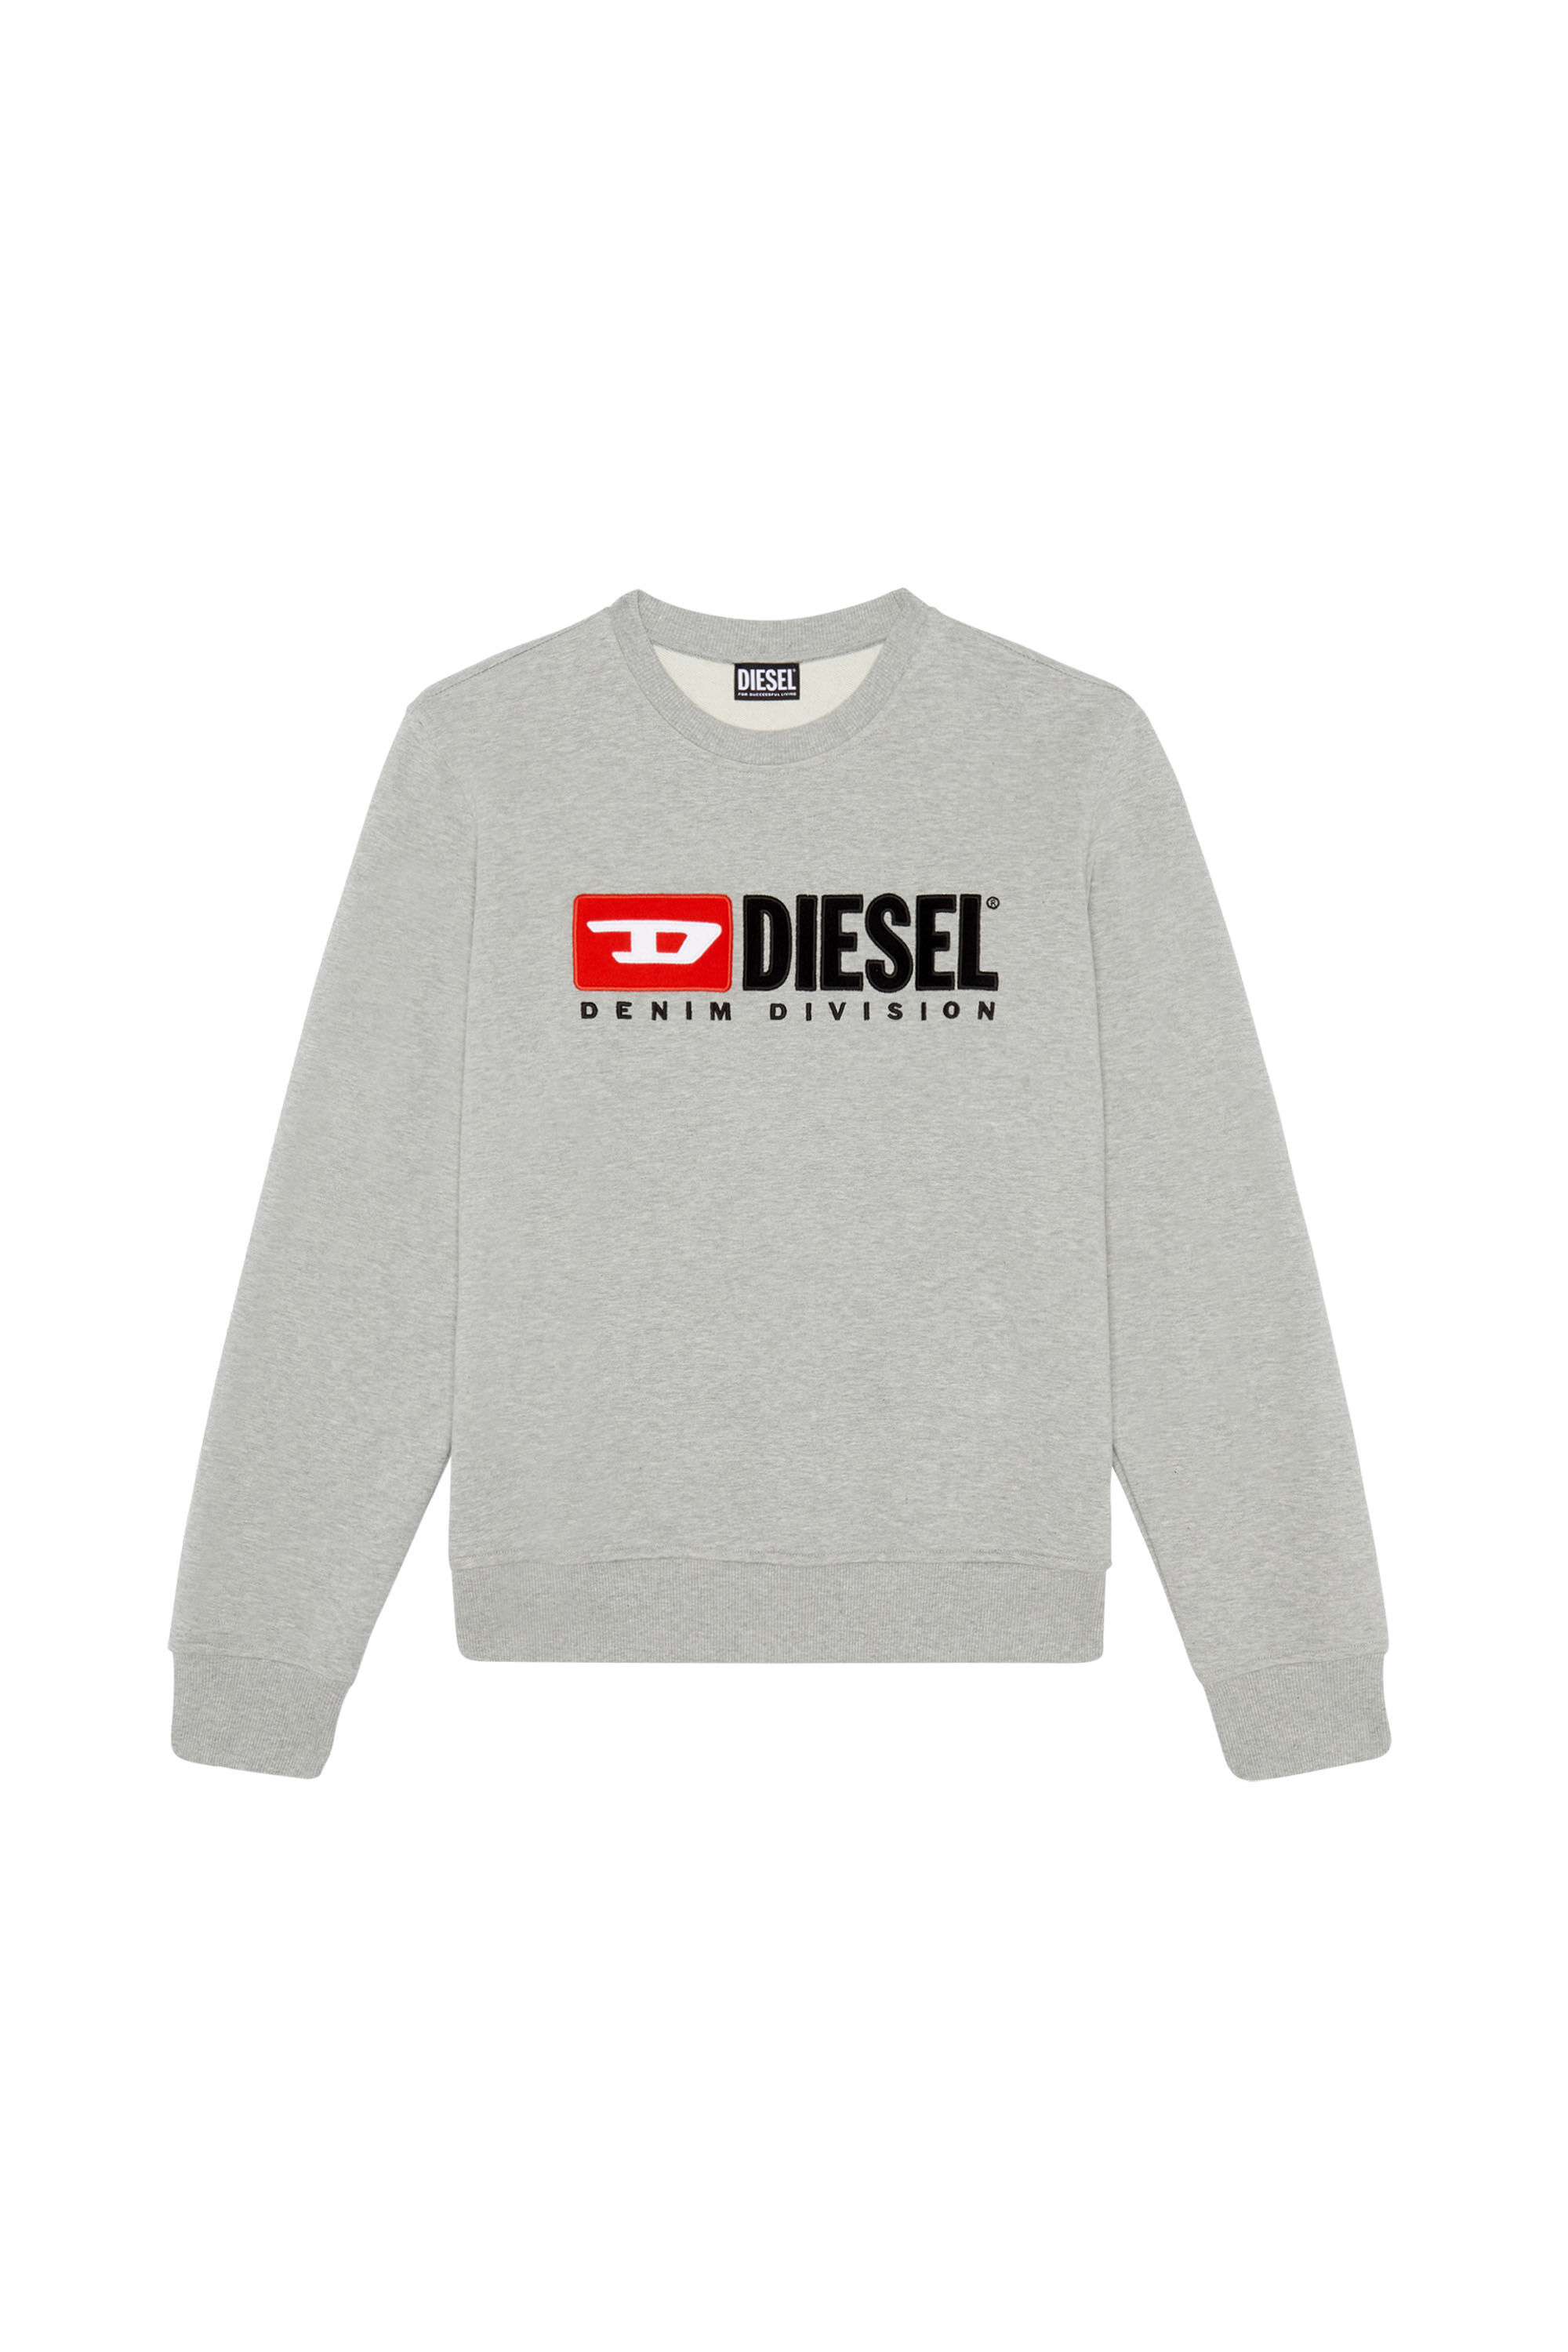 Diesel - S-GINN-DIV, Grey - Image 2